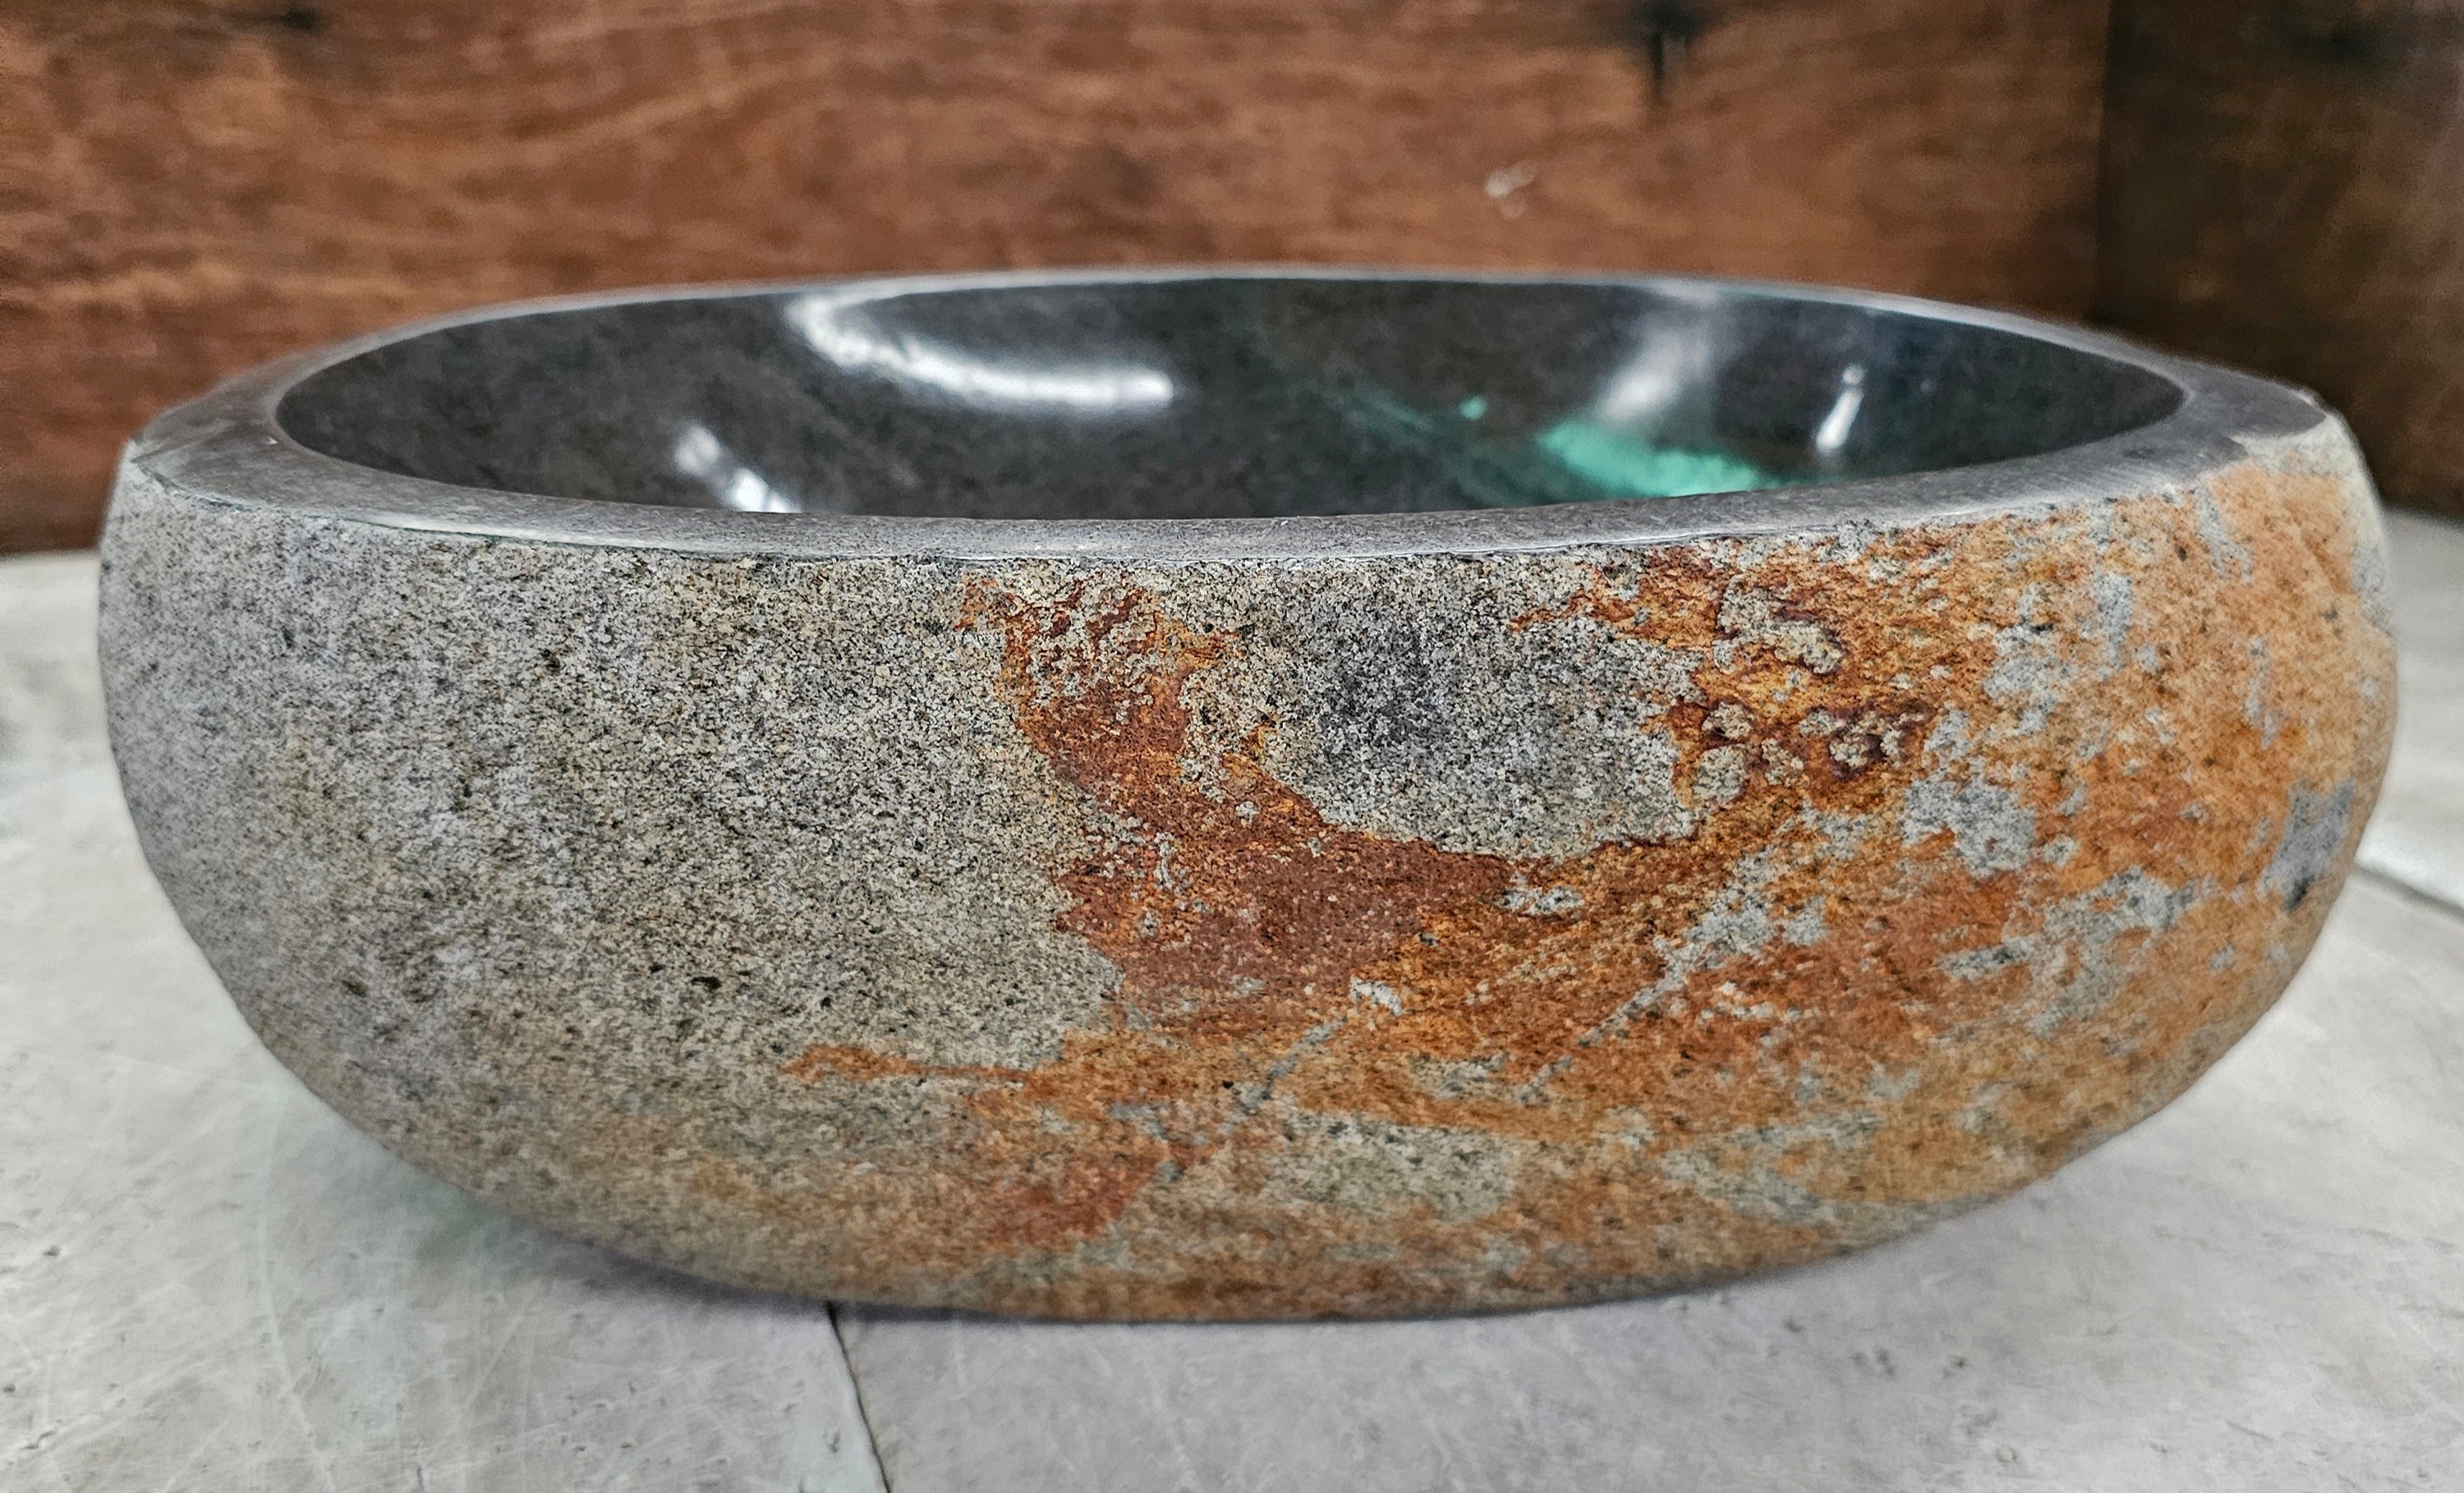 Handmade Natural Oval River Stone  Bathroom Basin  RS 2310027